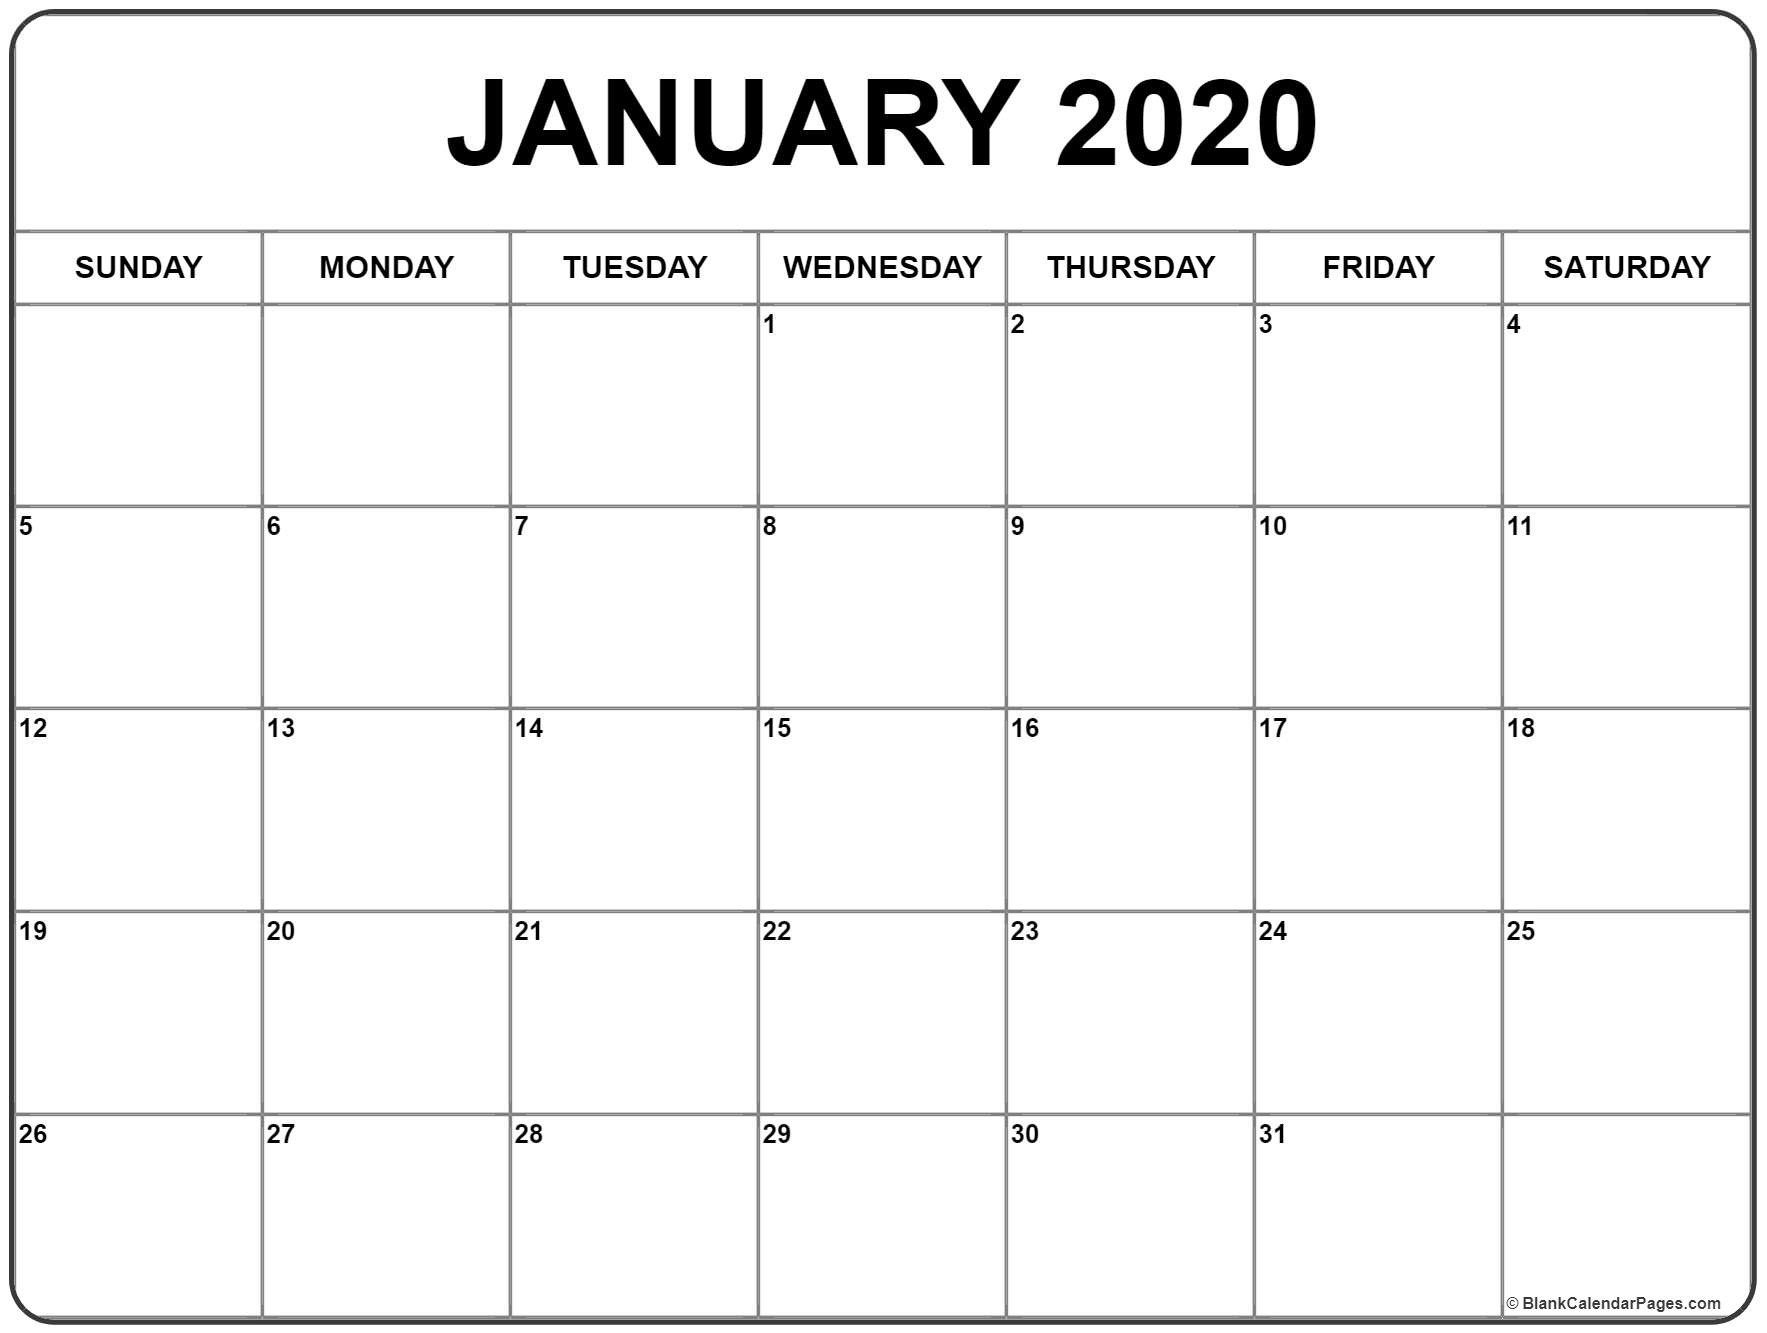 January 2020 Calendar | Free Printable Monthly Calendars-January 2020 Calendar Gujarati